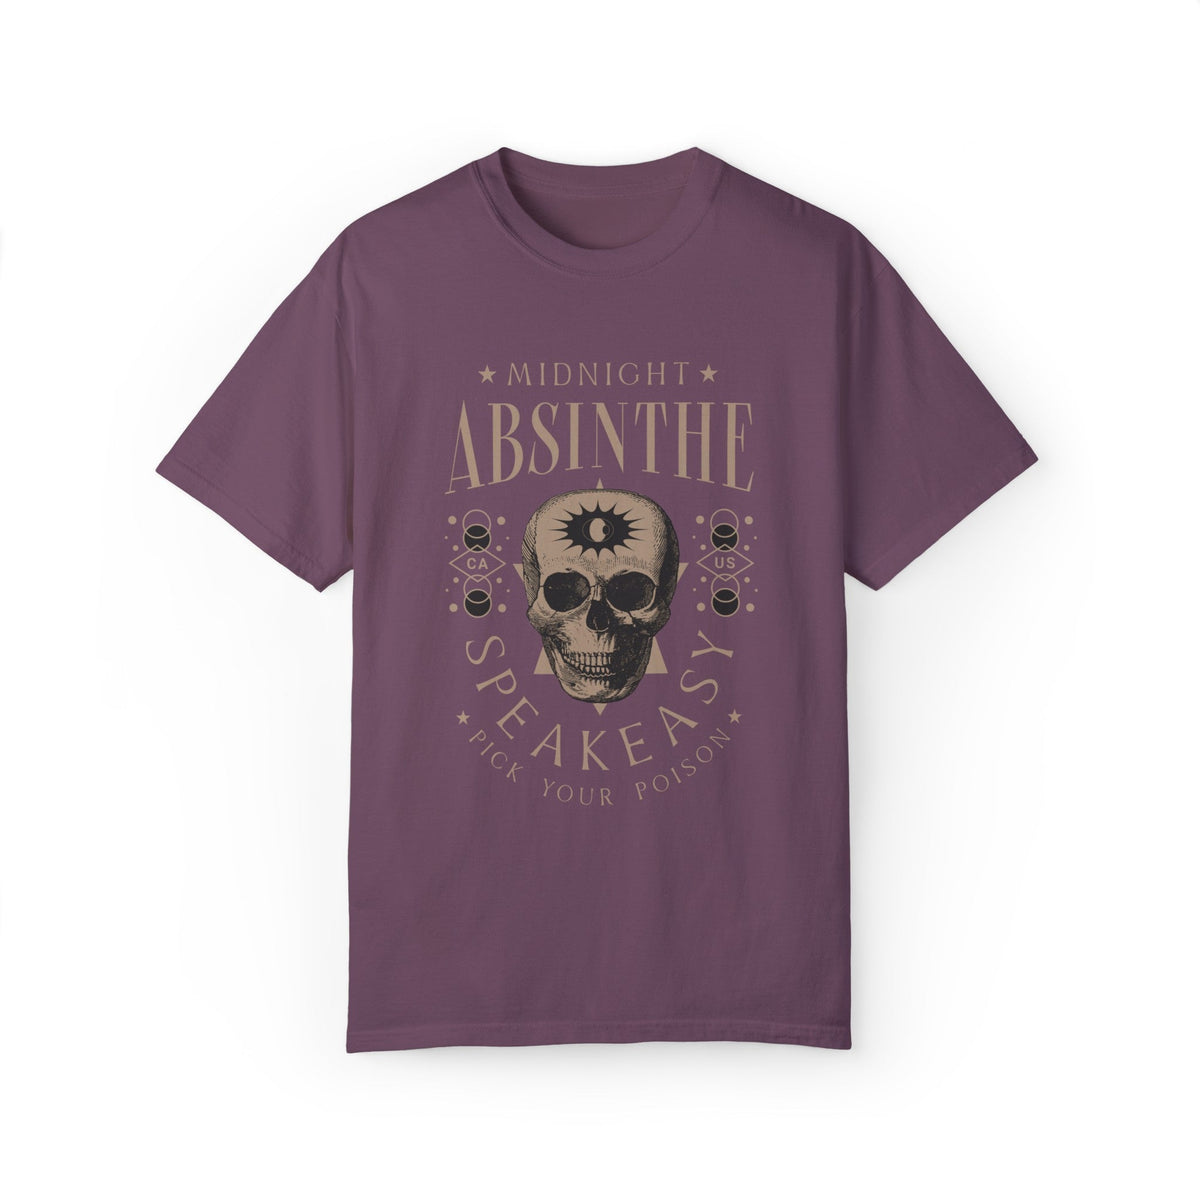 Midnight Absinthe Oversized Beefy Tee - Goth Cloth Co.T - Shirt18009592294375757282